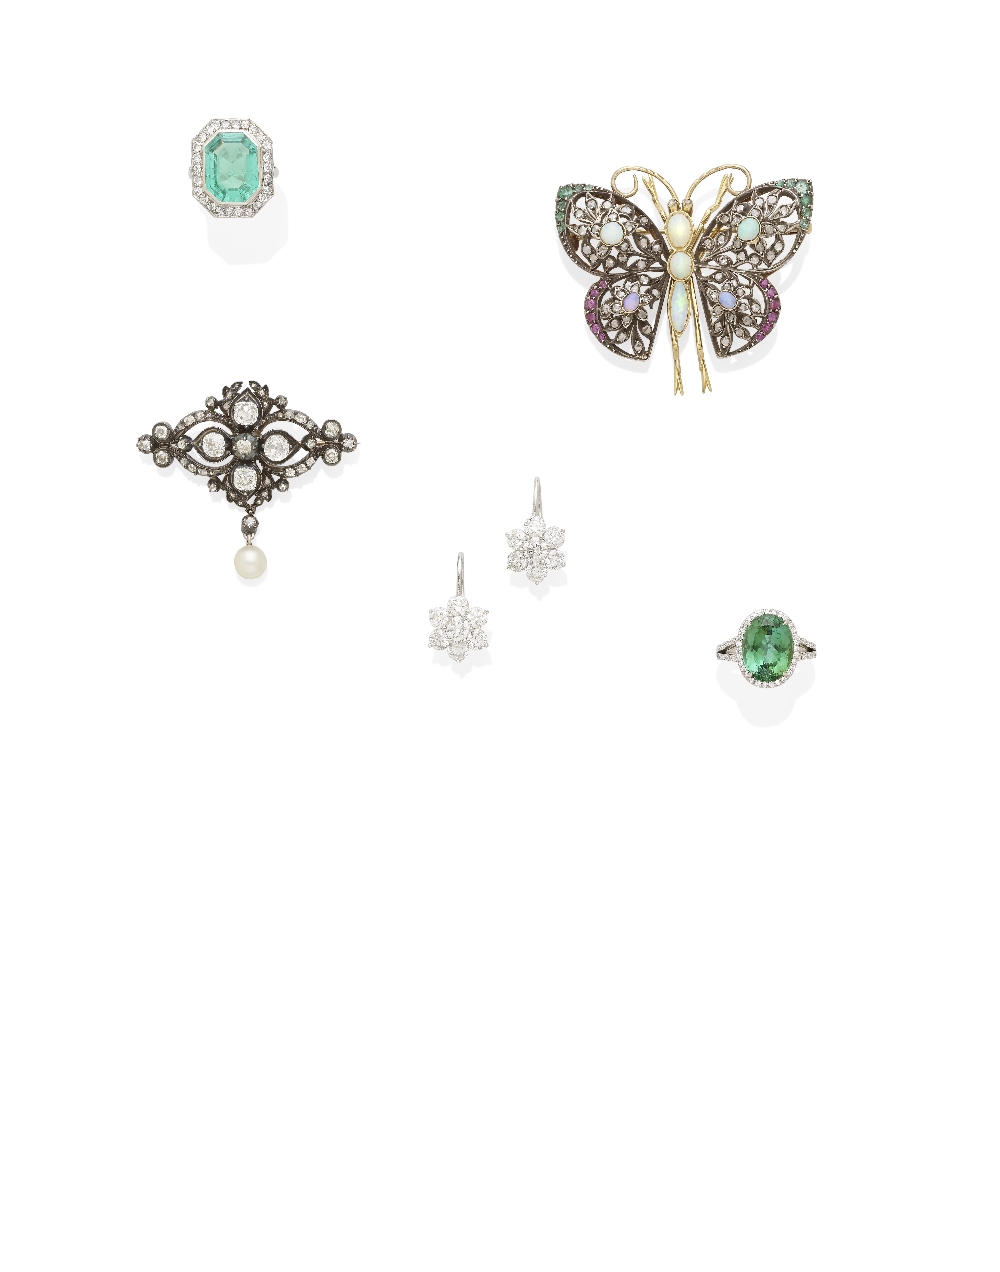 A green tourmaline and diamond ring, Tiffany & Co.